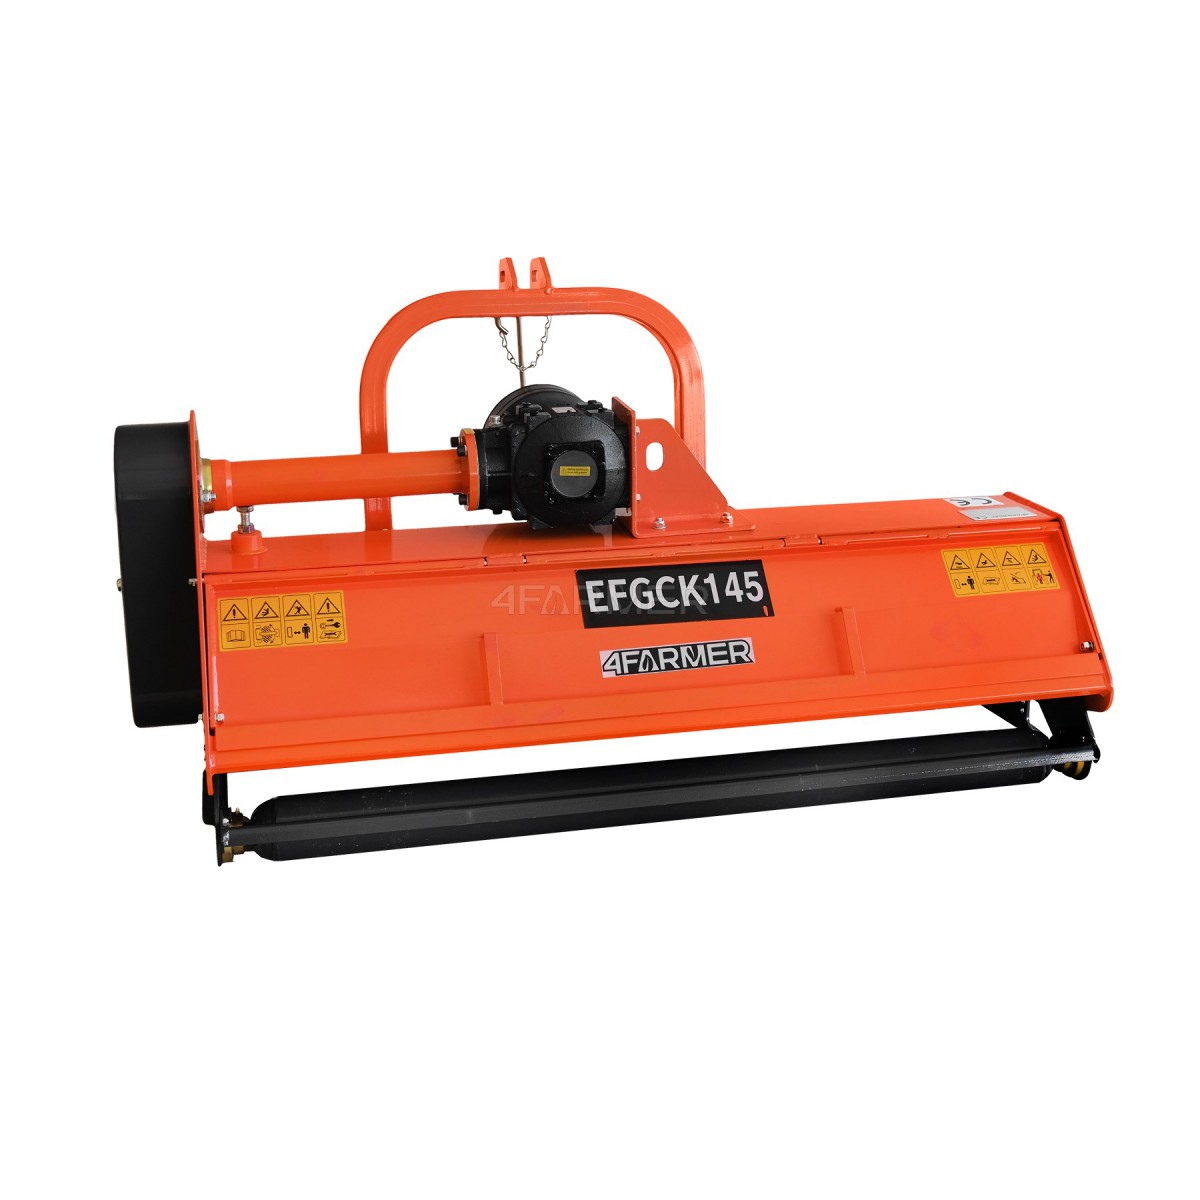 Flail mower EFGC-K 155, opening 4FARMER hatch - orange